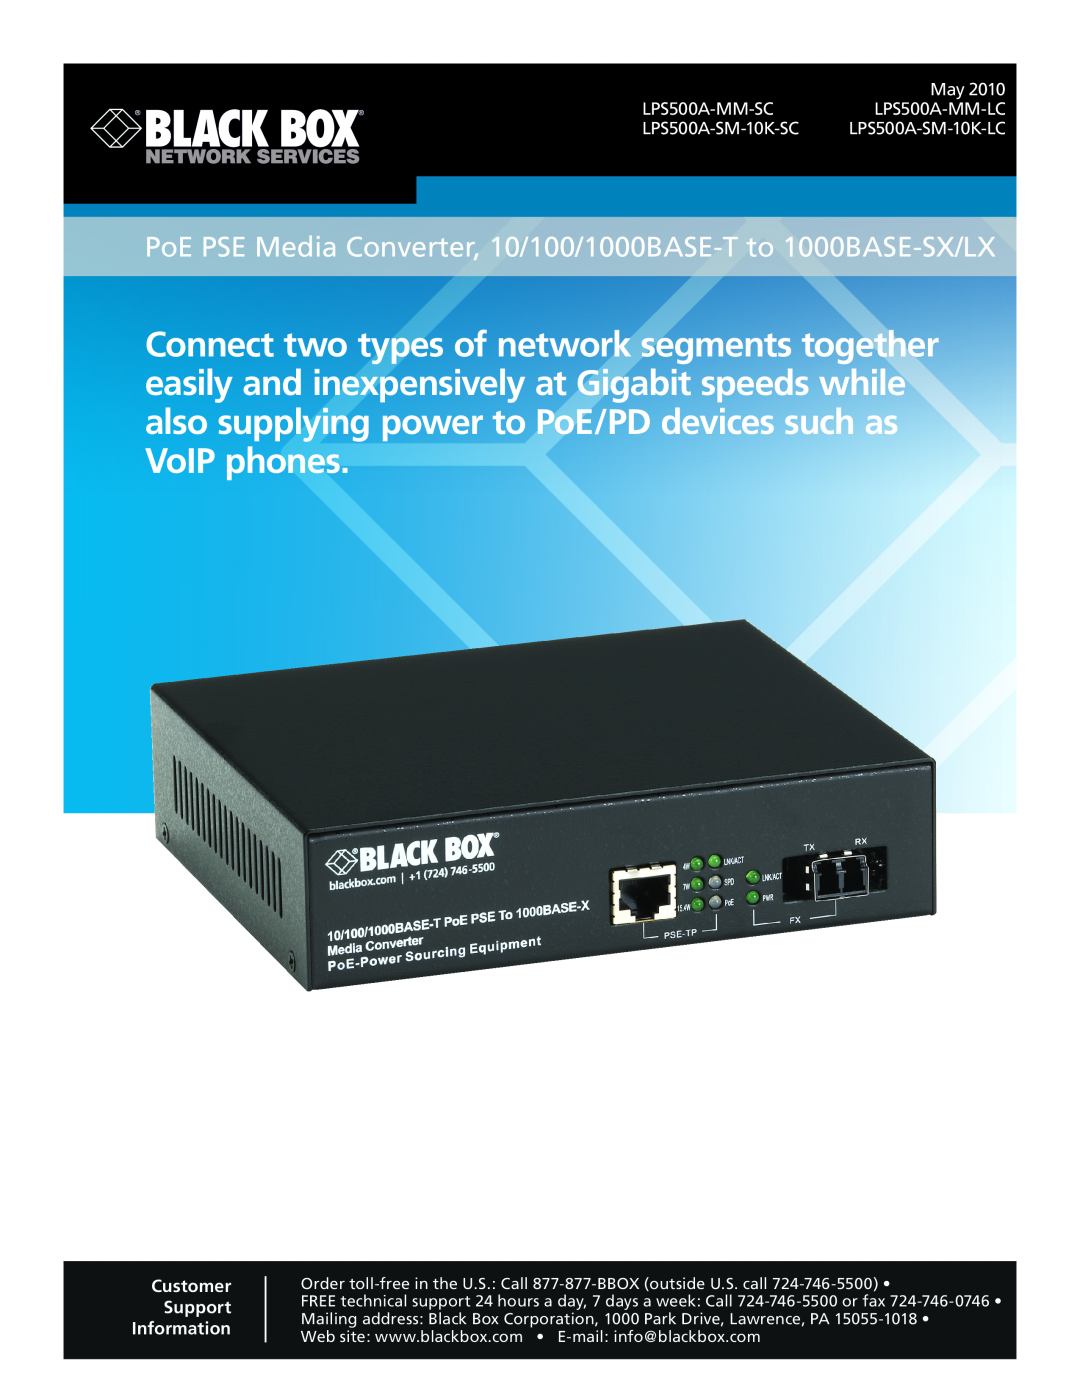 Black Box PoE PSE Media Converter manual May LPS500A-MM-SCLPS500A-MM-LC, LPS500A-SM-10K-SC LPS500A-SM-10K-LC 